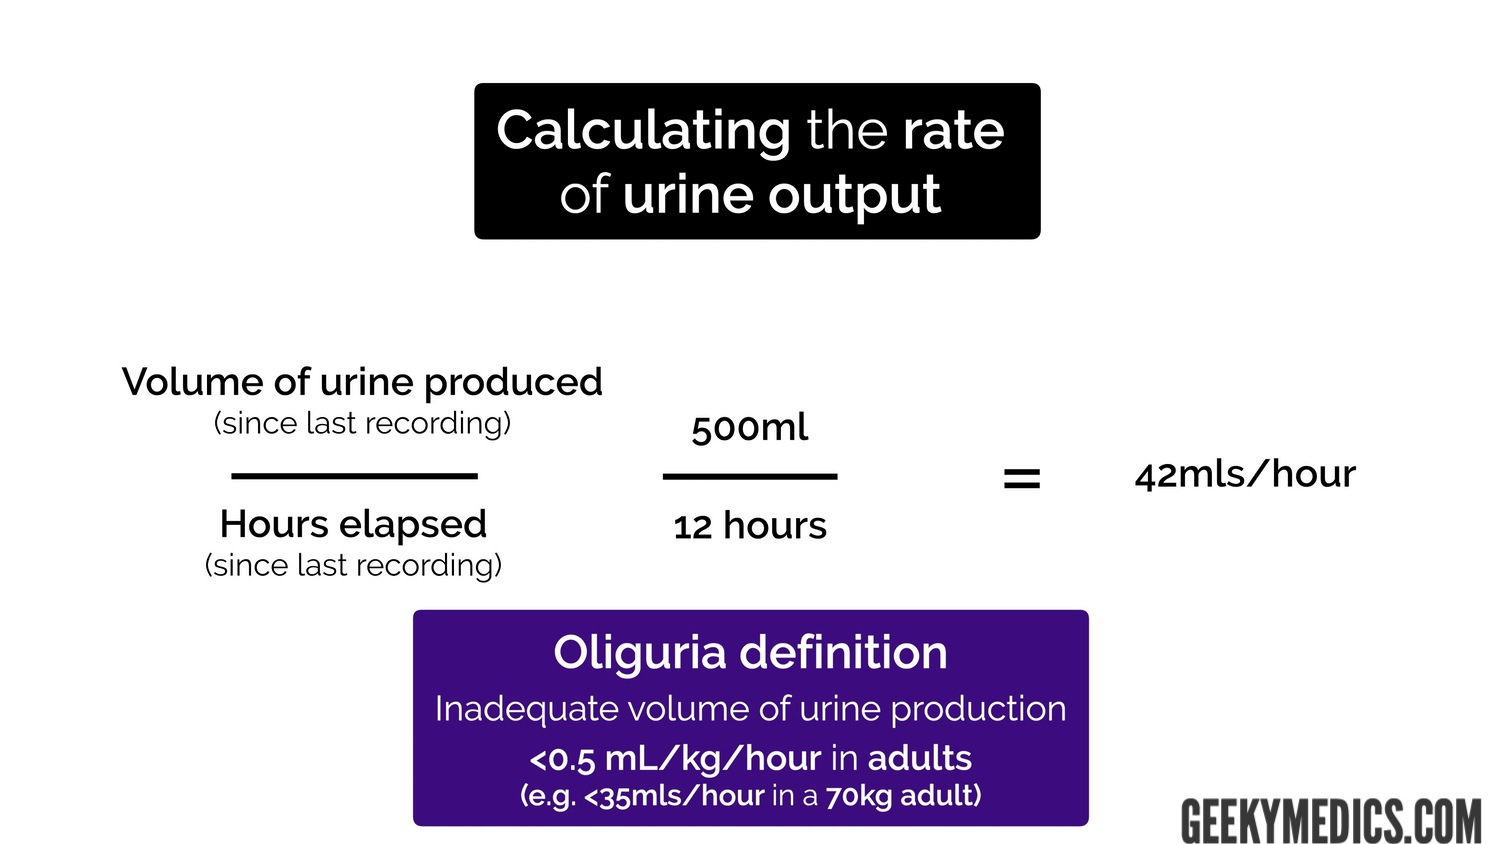 Calculate rate of urine output - oligouria